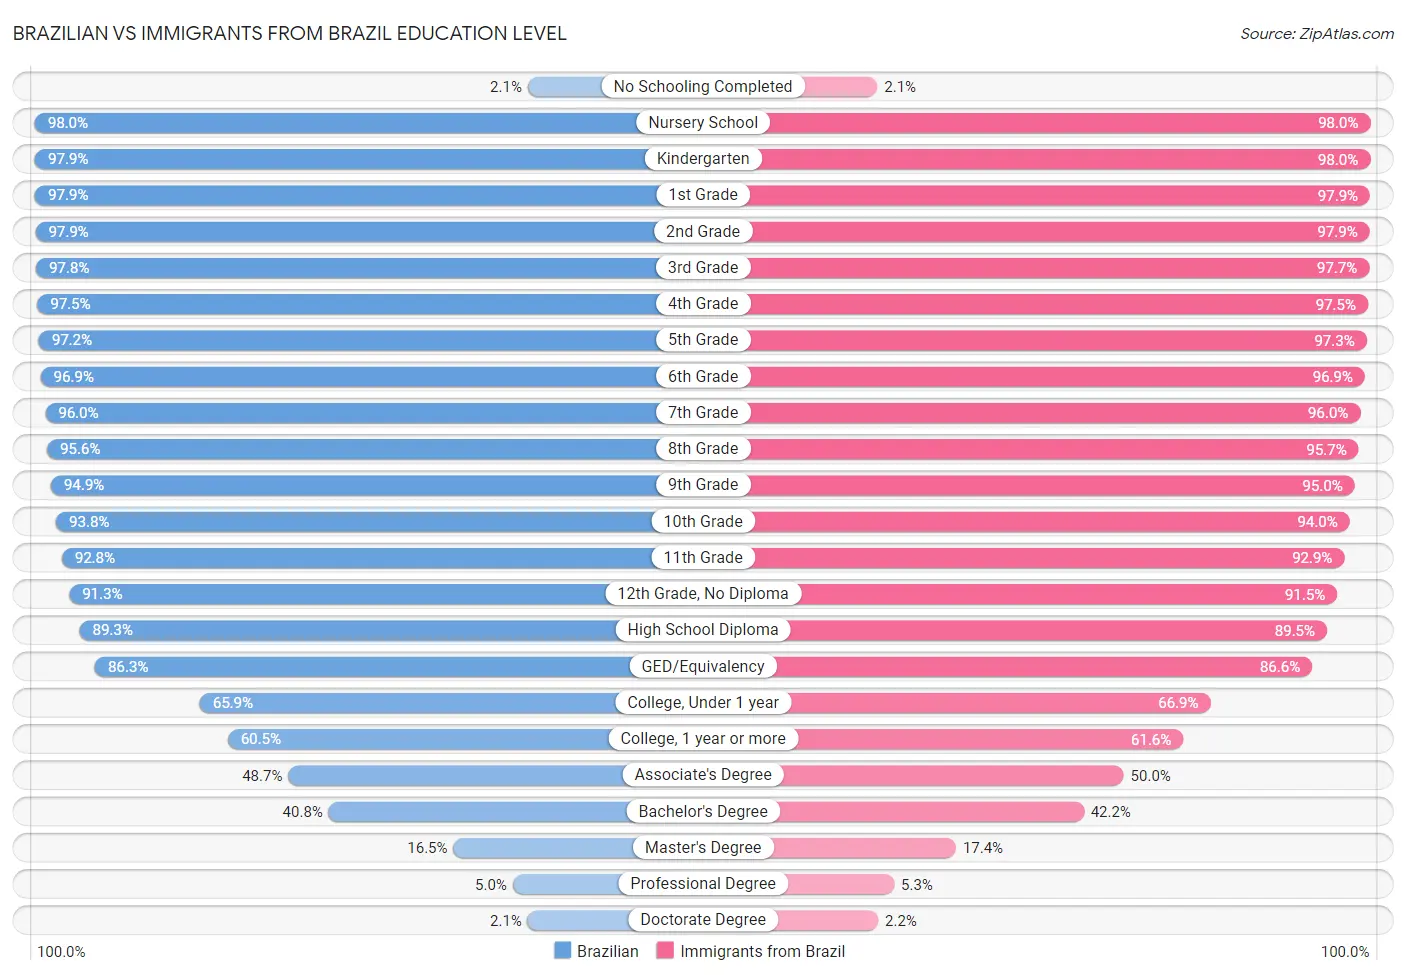 Brazilian vs Immigrants from Brazil Education Level